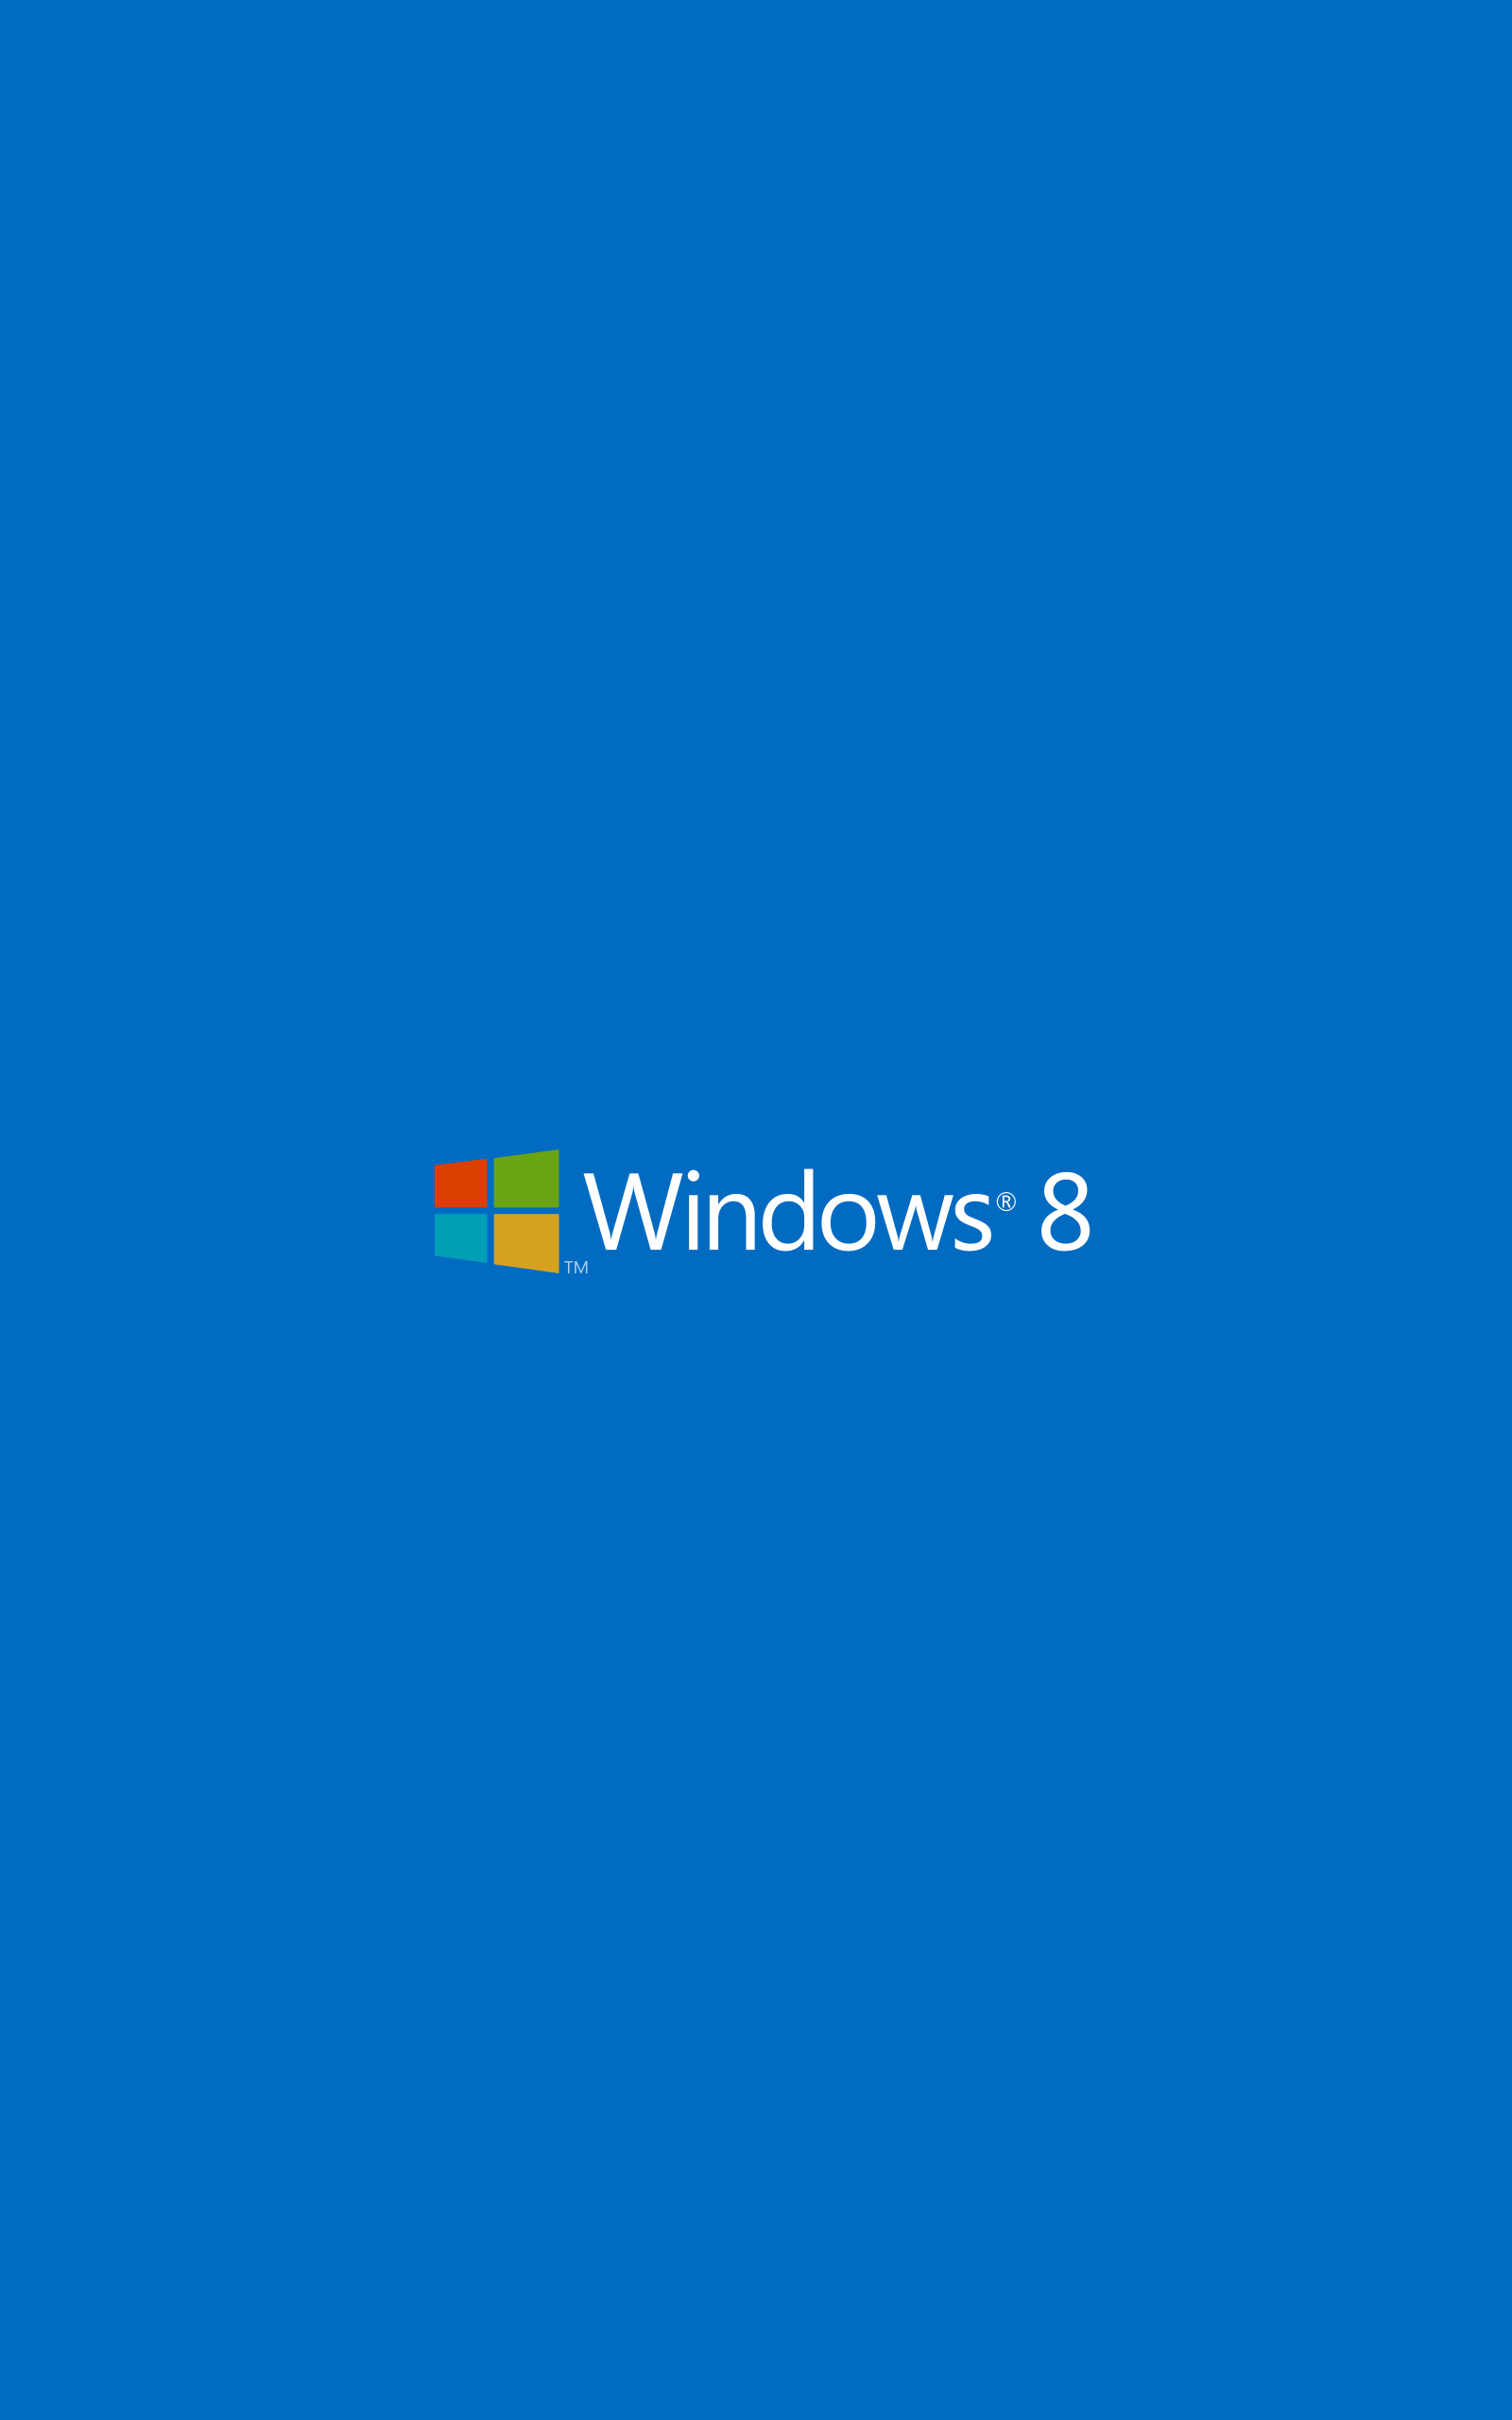 General 1600x2560 Windows 8 Microsoft Windows operating system minimalism portrait display blue background simple background logo